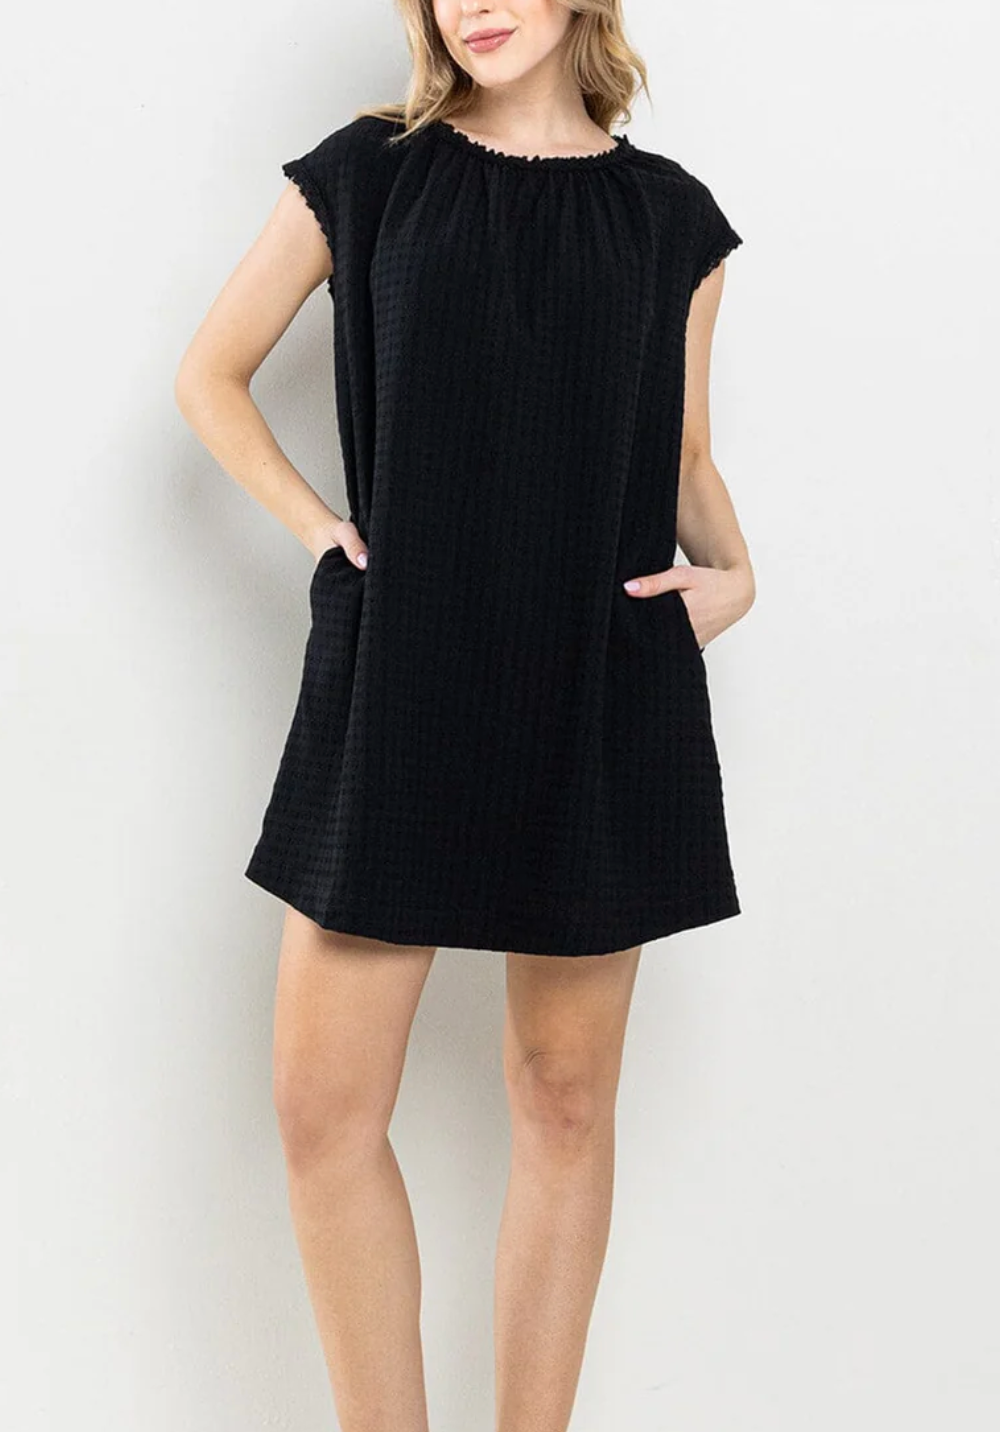 Chic Charm: Women's Sleeveless Tunic Mini Dress With Pockets